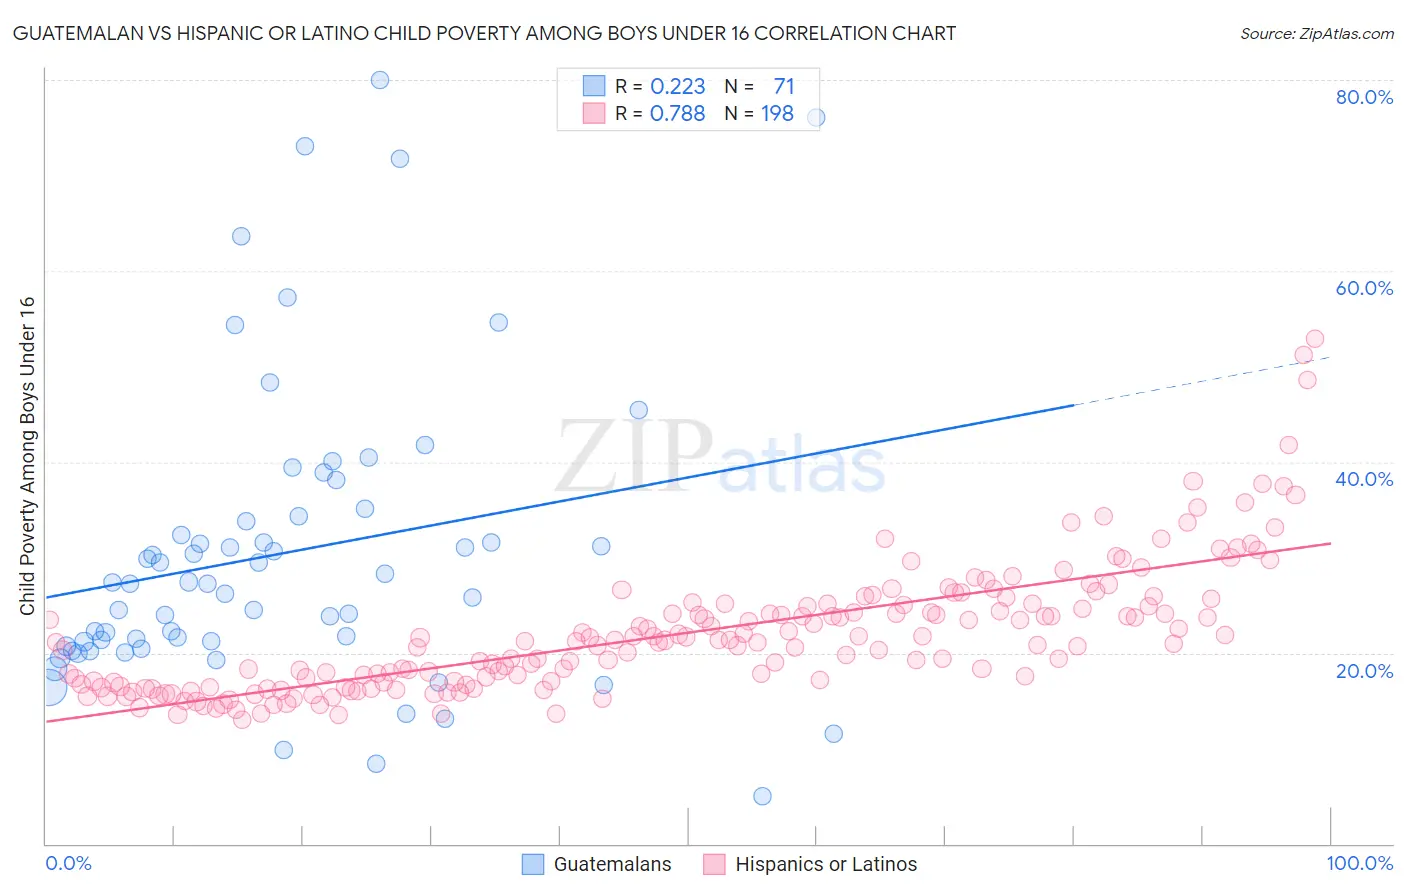 Guatemalan vs Hispanic or Latino Child Poverty Among Boys Under 16